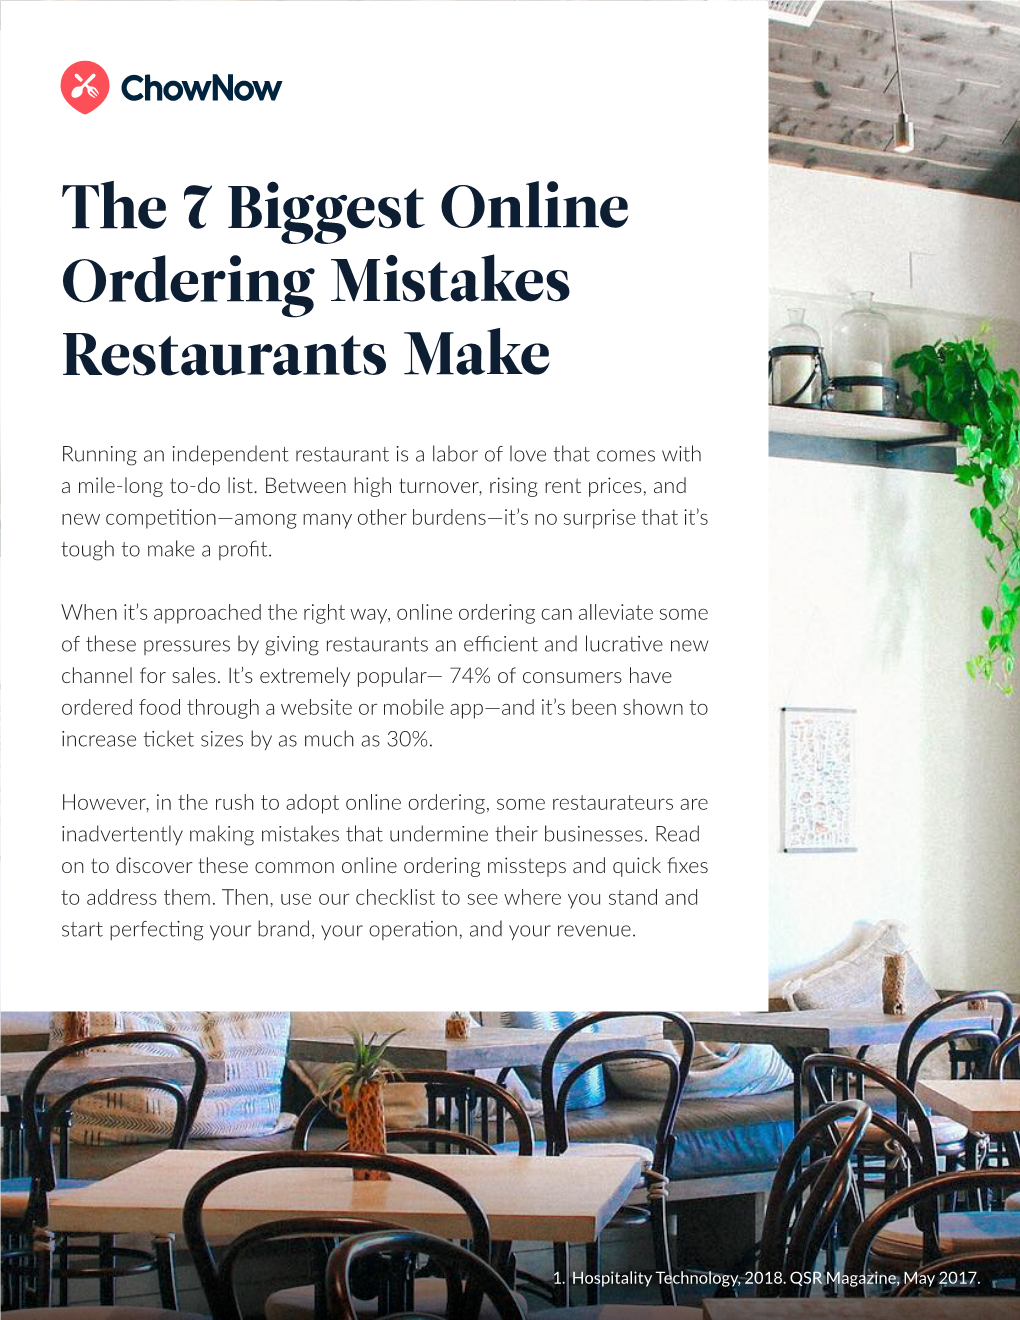 The 7 Biggest Online Ordering Mistakes Restaurants Make